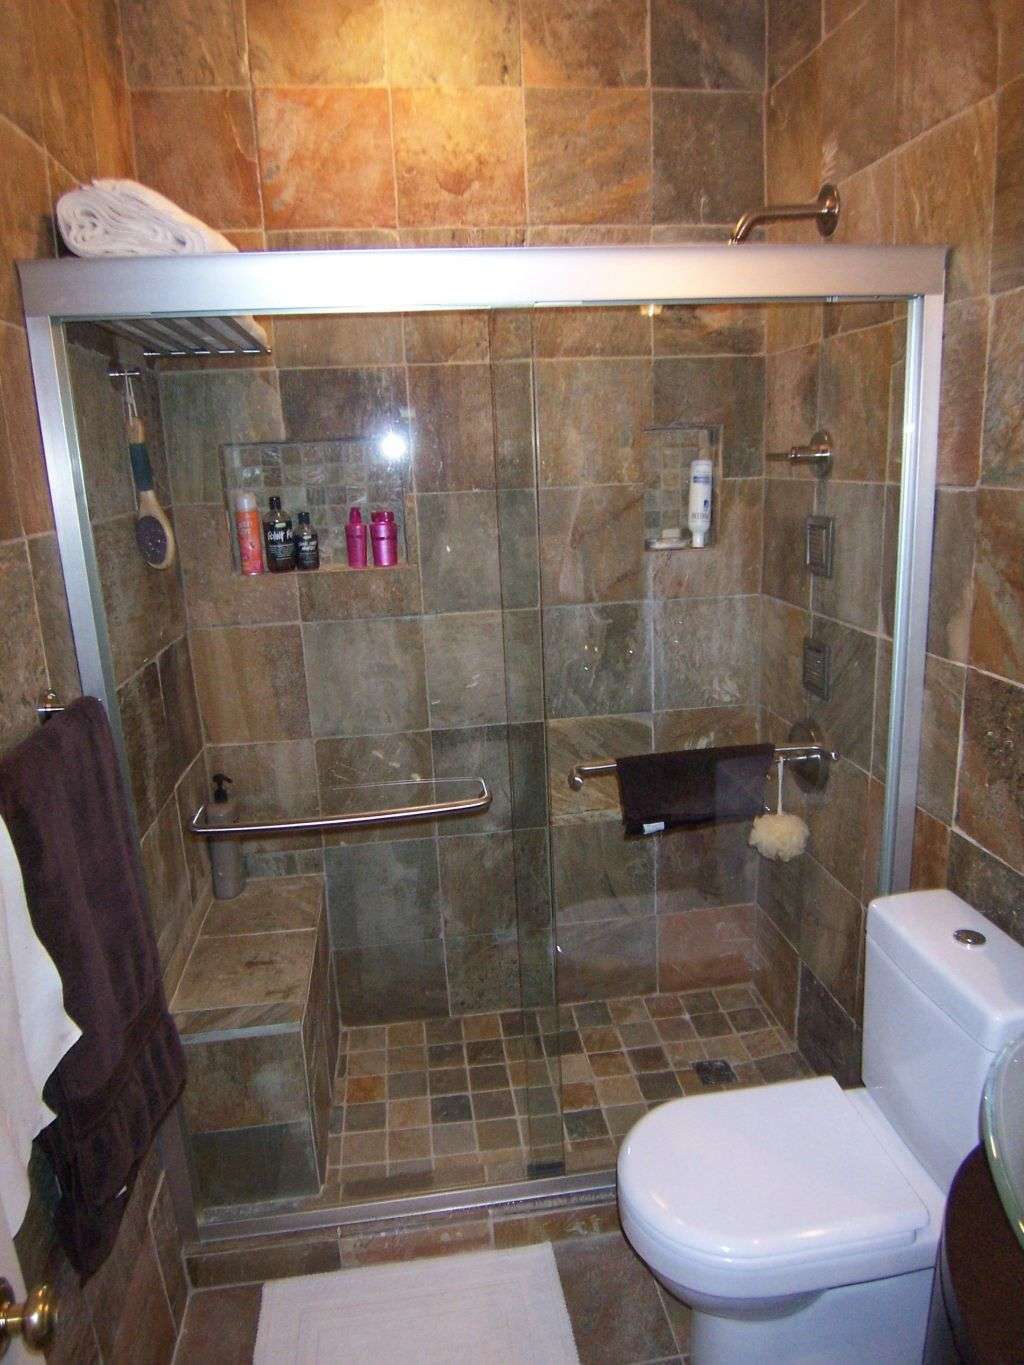 Best Small Bathroom Ideas